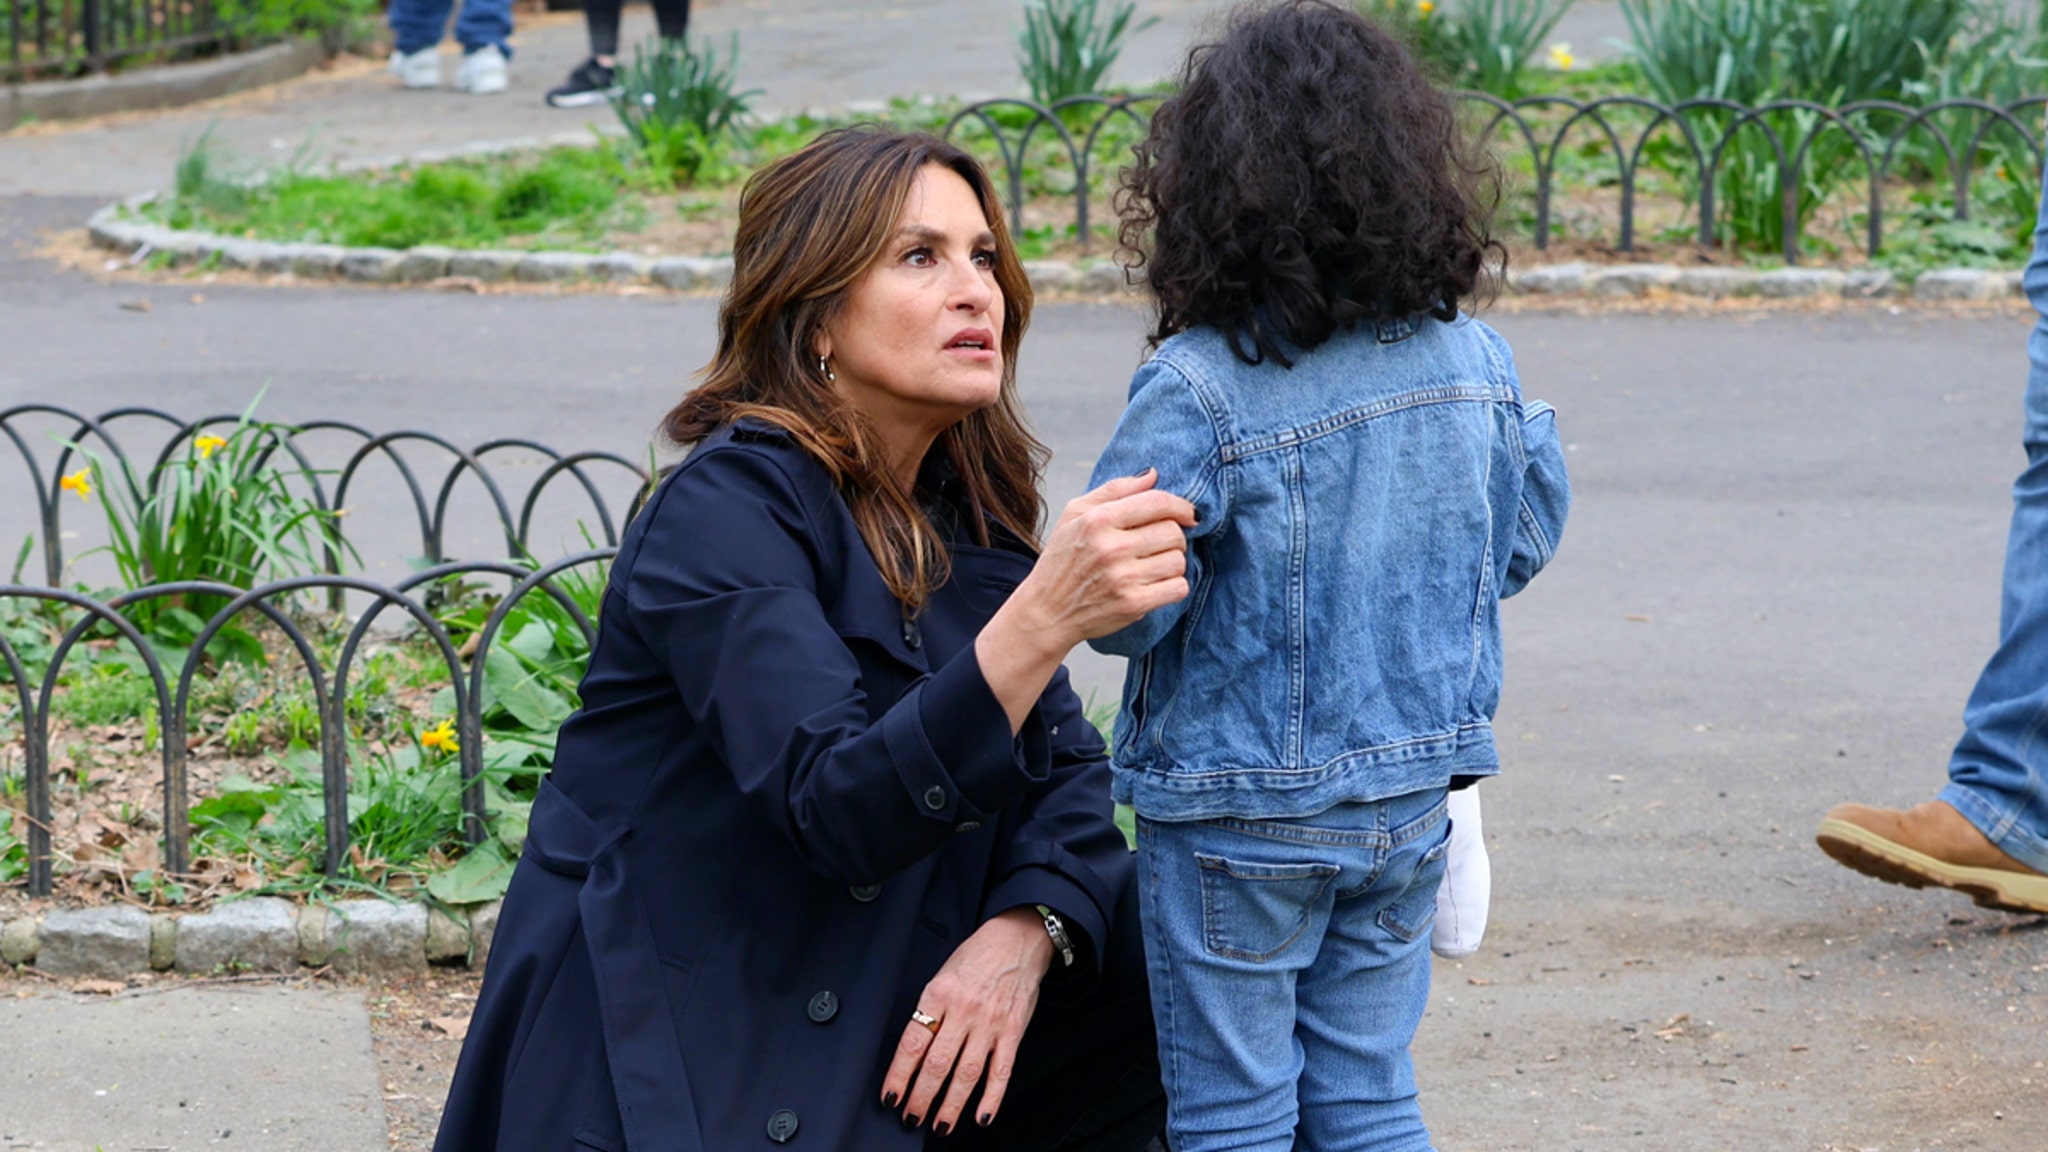 Mariska Hargitay Helps Little Girl Find Mom While Filming ‘Law & Order’